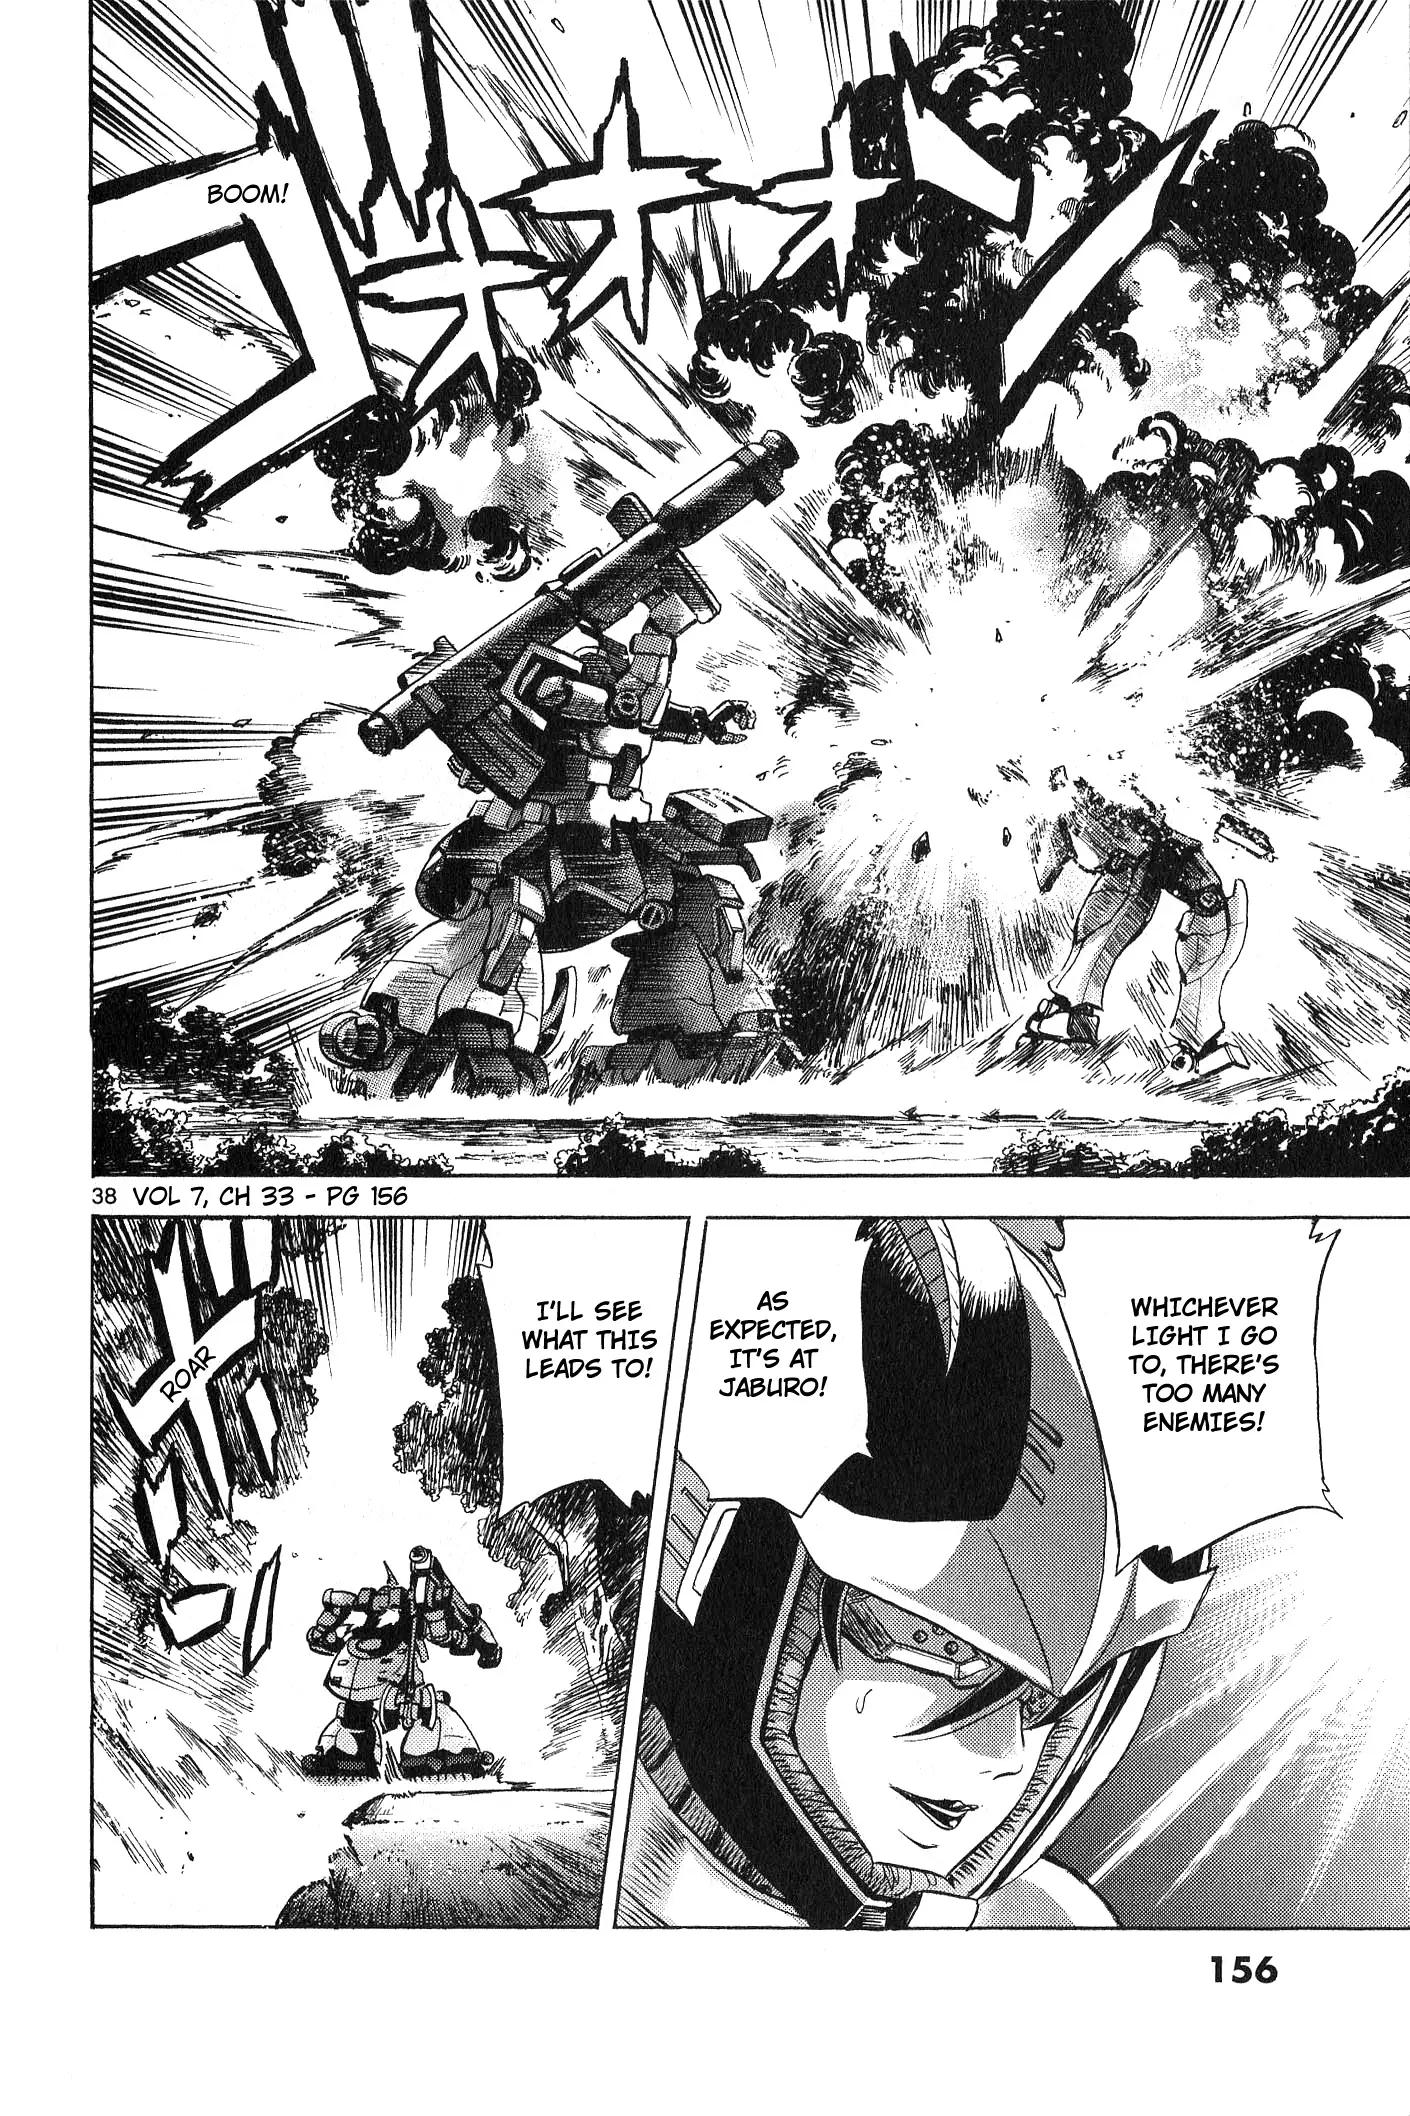 Mobile Suit Gundam Aggressor - 33 page 35-9025c92e